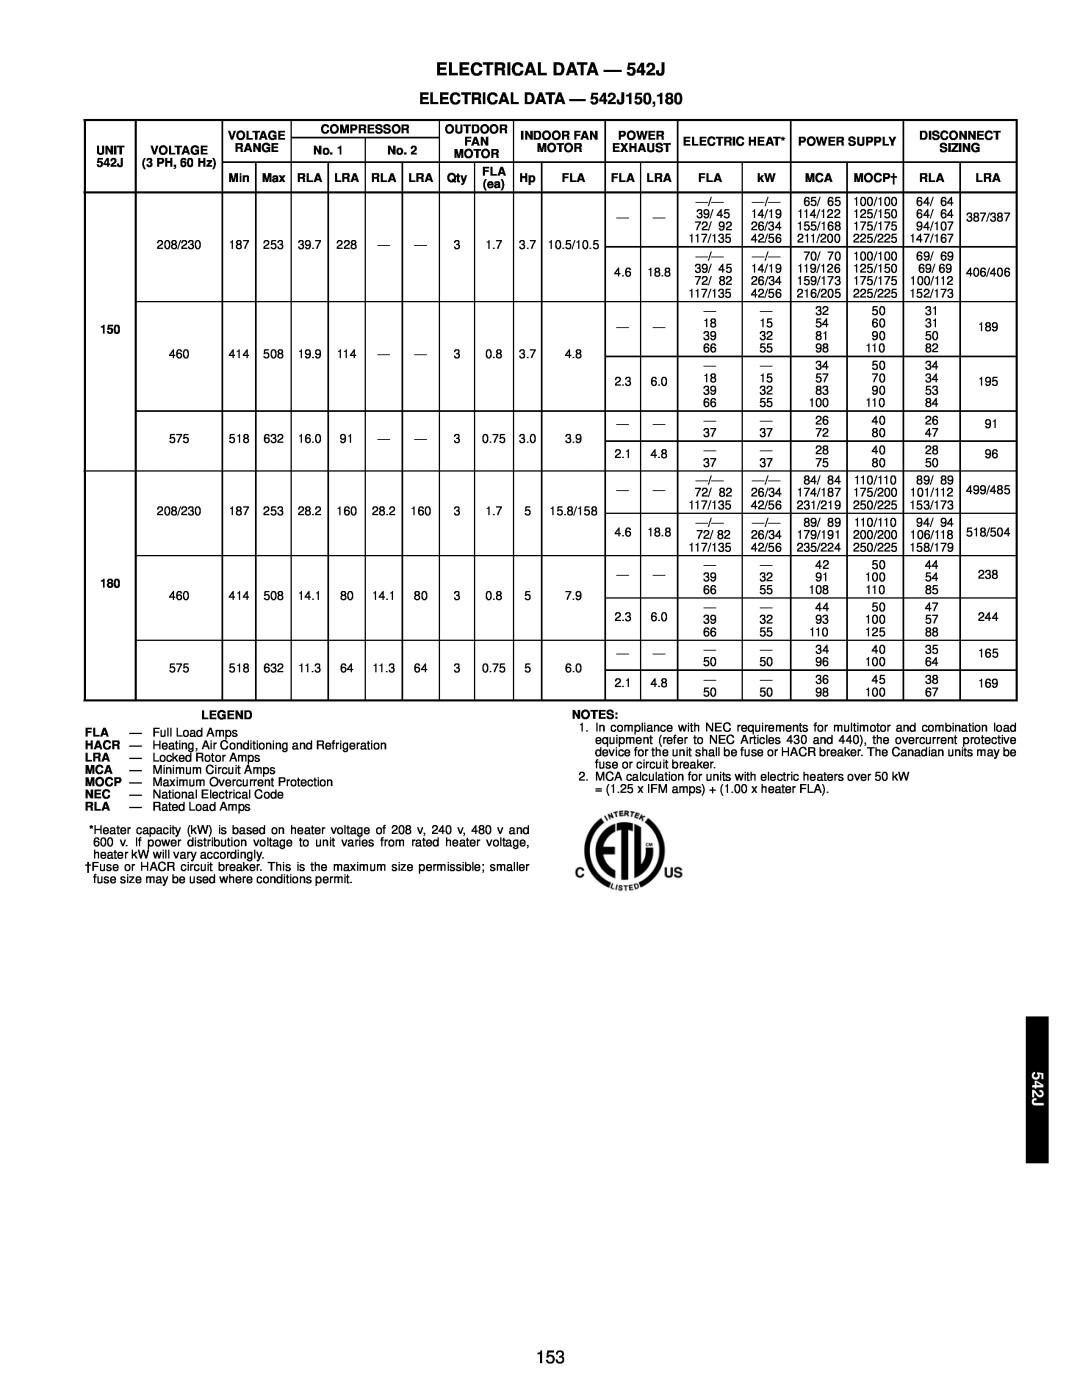 Bryant 549C manual ELECTRICAL DATA — 542J150,180 